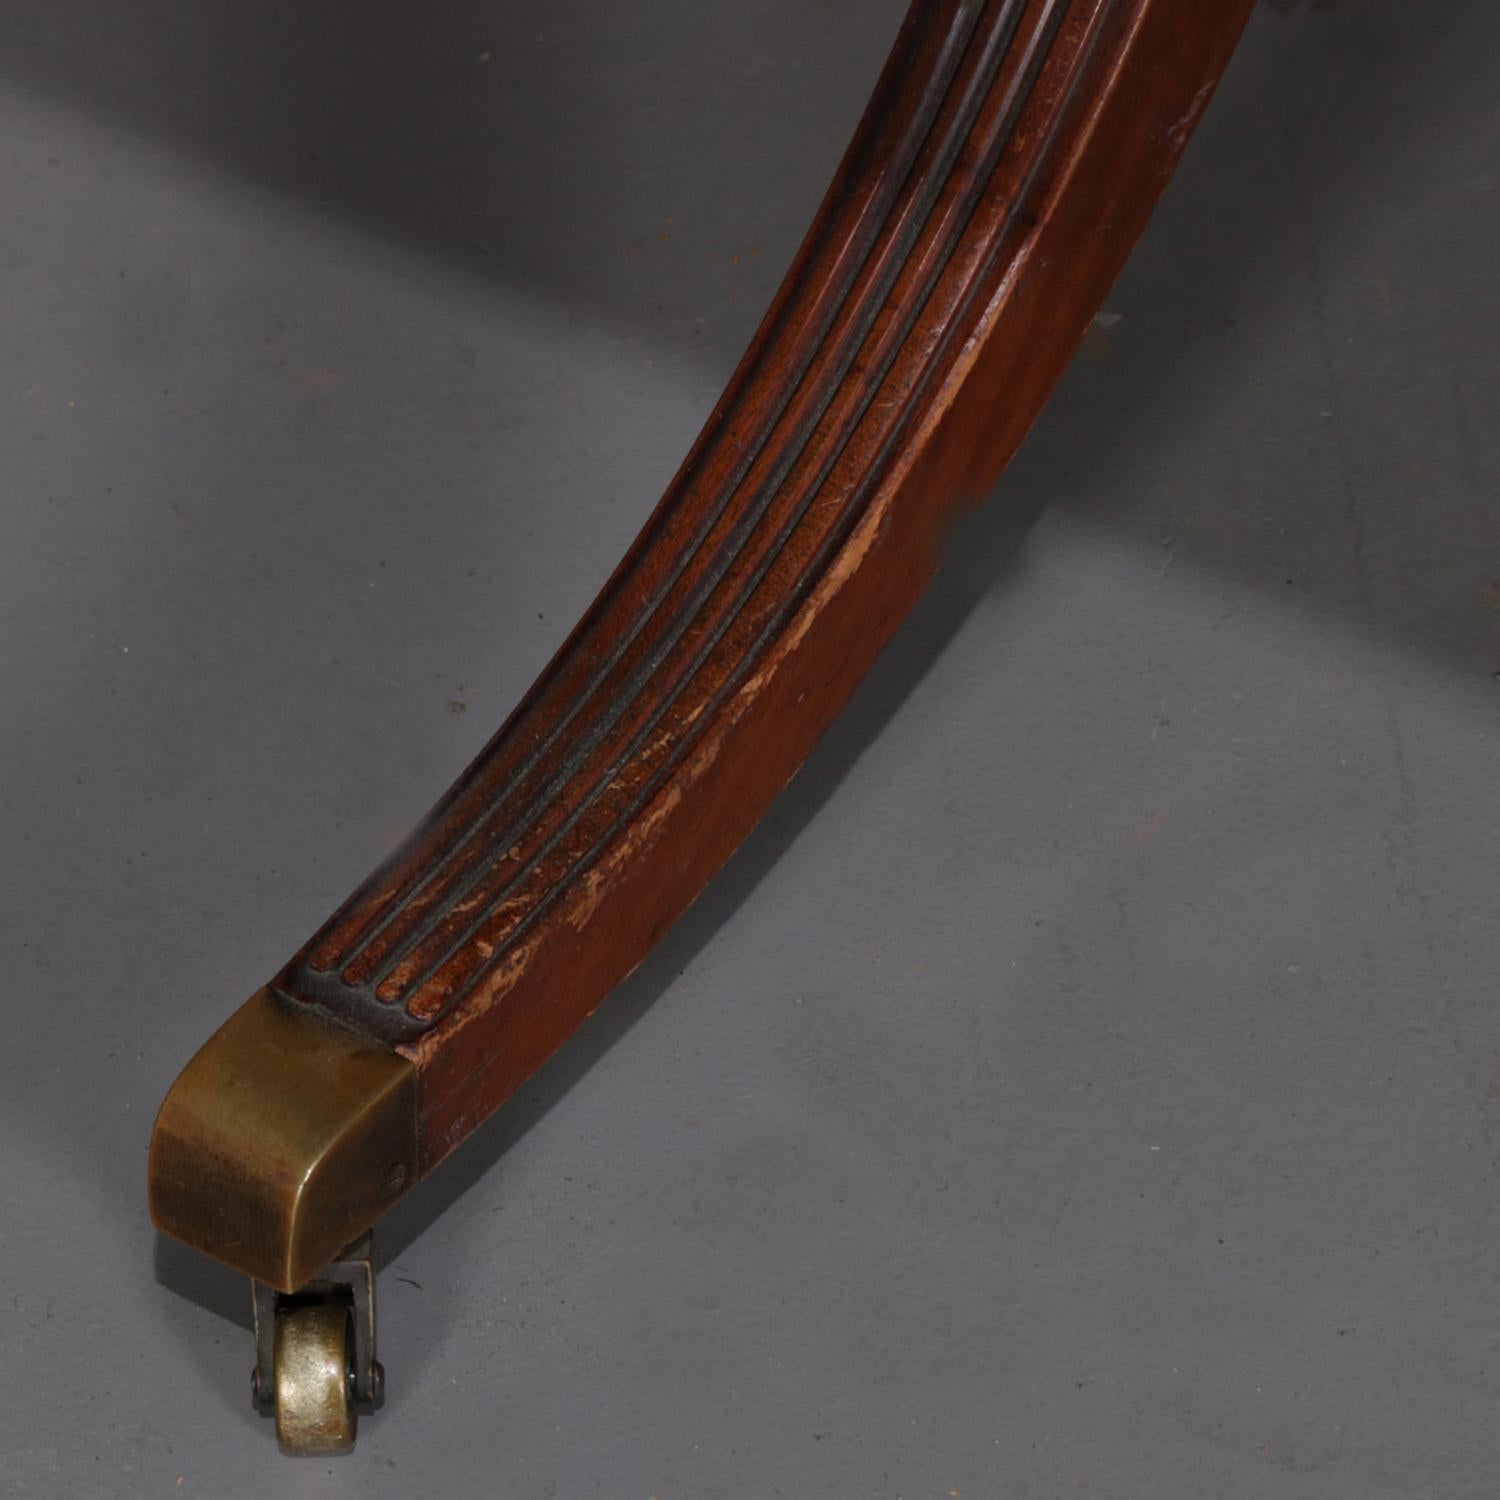 Sheraton Antique Mahogany Duncan Phyfe Style Satinwood Banded Double Pedestal Table c1880